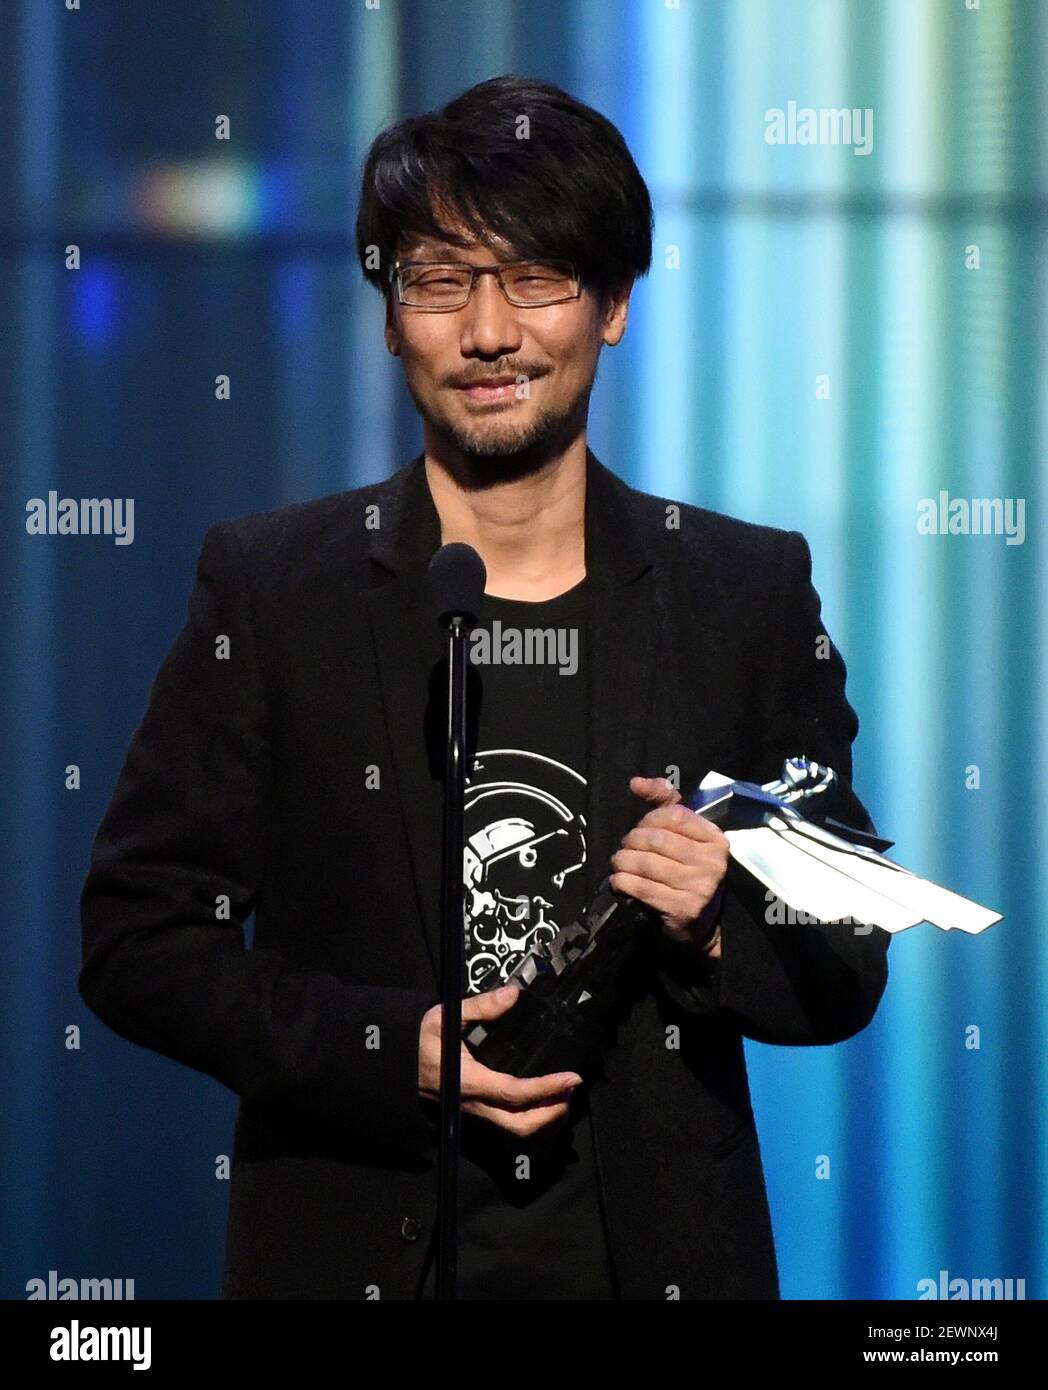 The Game Awards 2016 - Hideo Kojima Industry Icon Award 